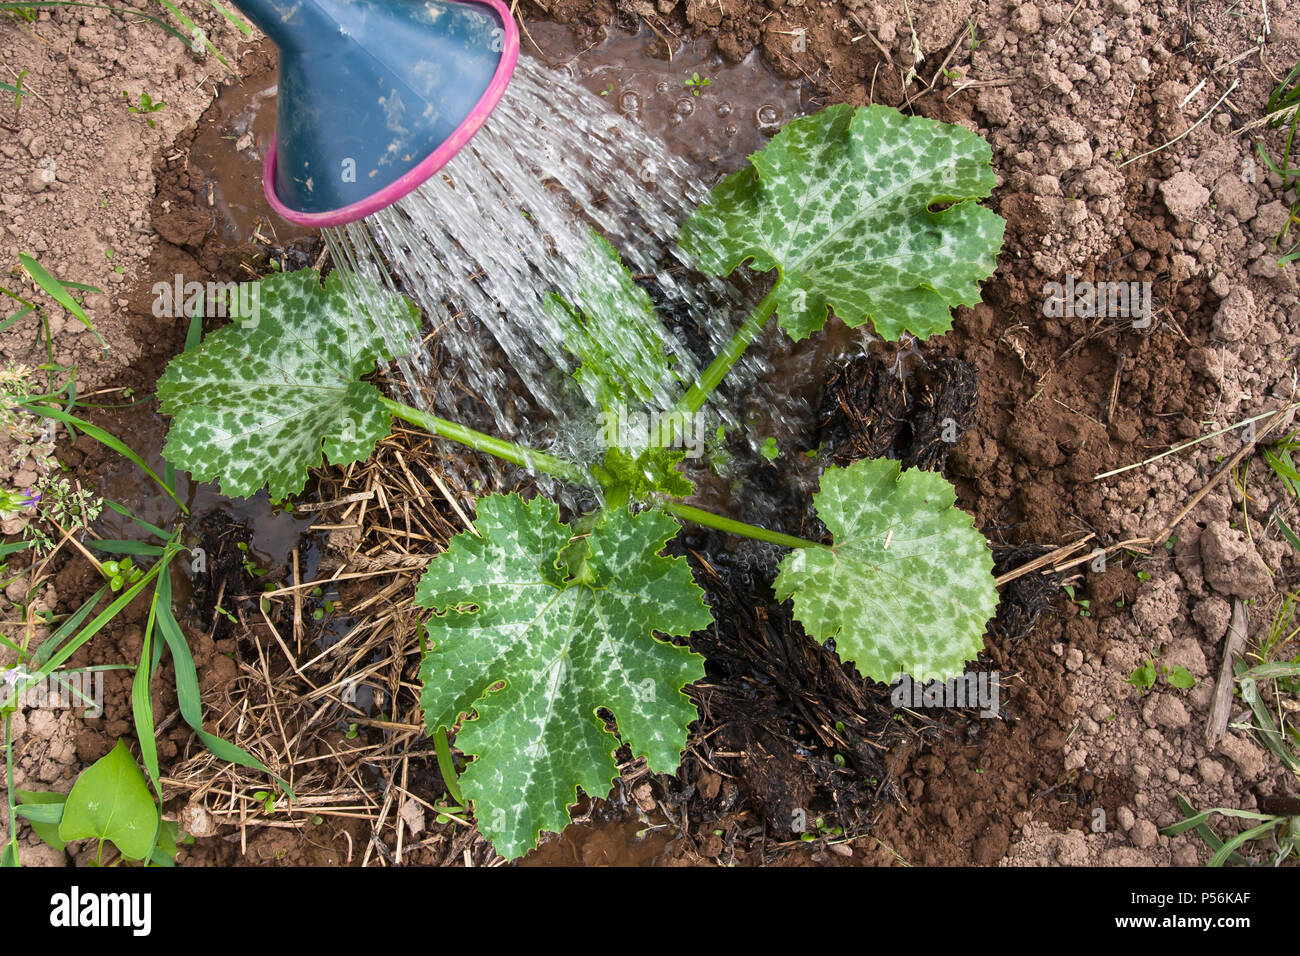 watering the marrow in the vegetable garden, closeup Stock Photo